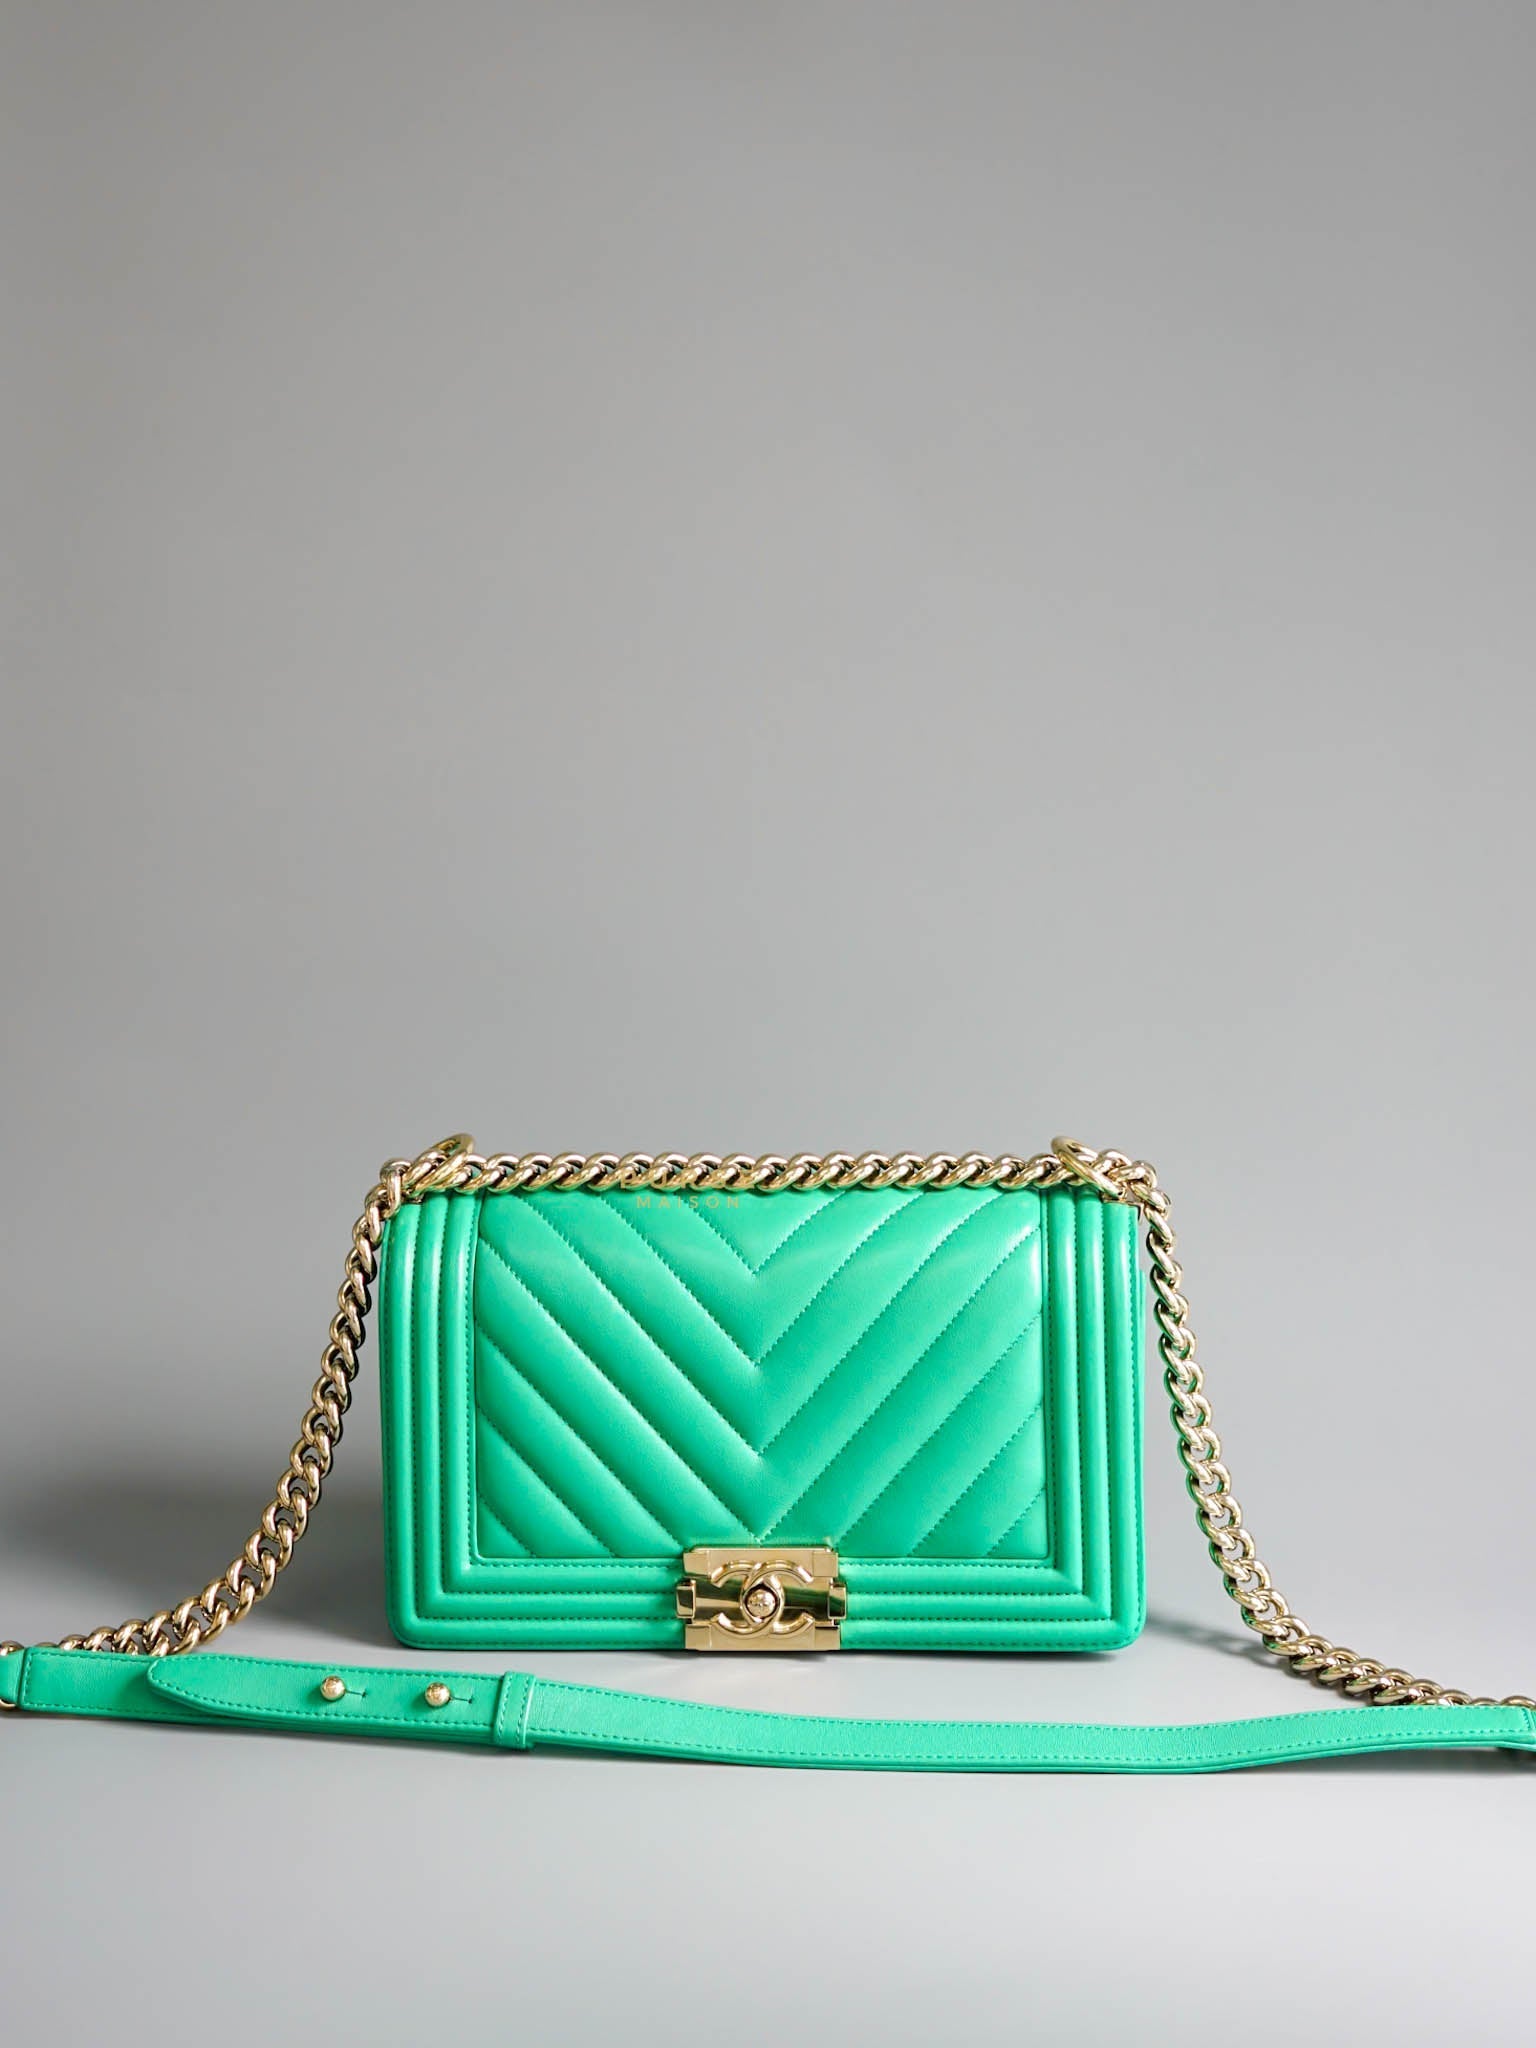 Chanel Boy Medium in Mint Green Chevron Lambskin Leather and Light Gold Hardware Series 23 | Purse Maison Luxury Bags Shop